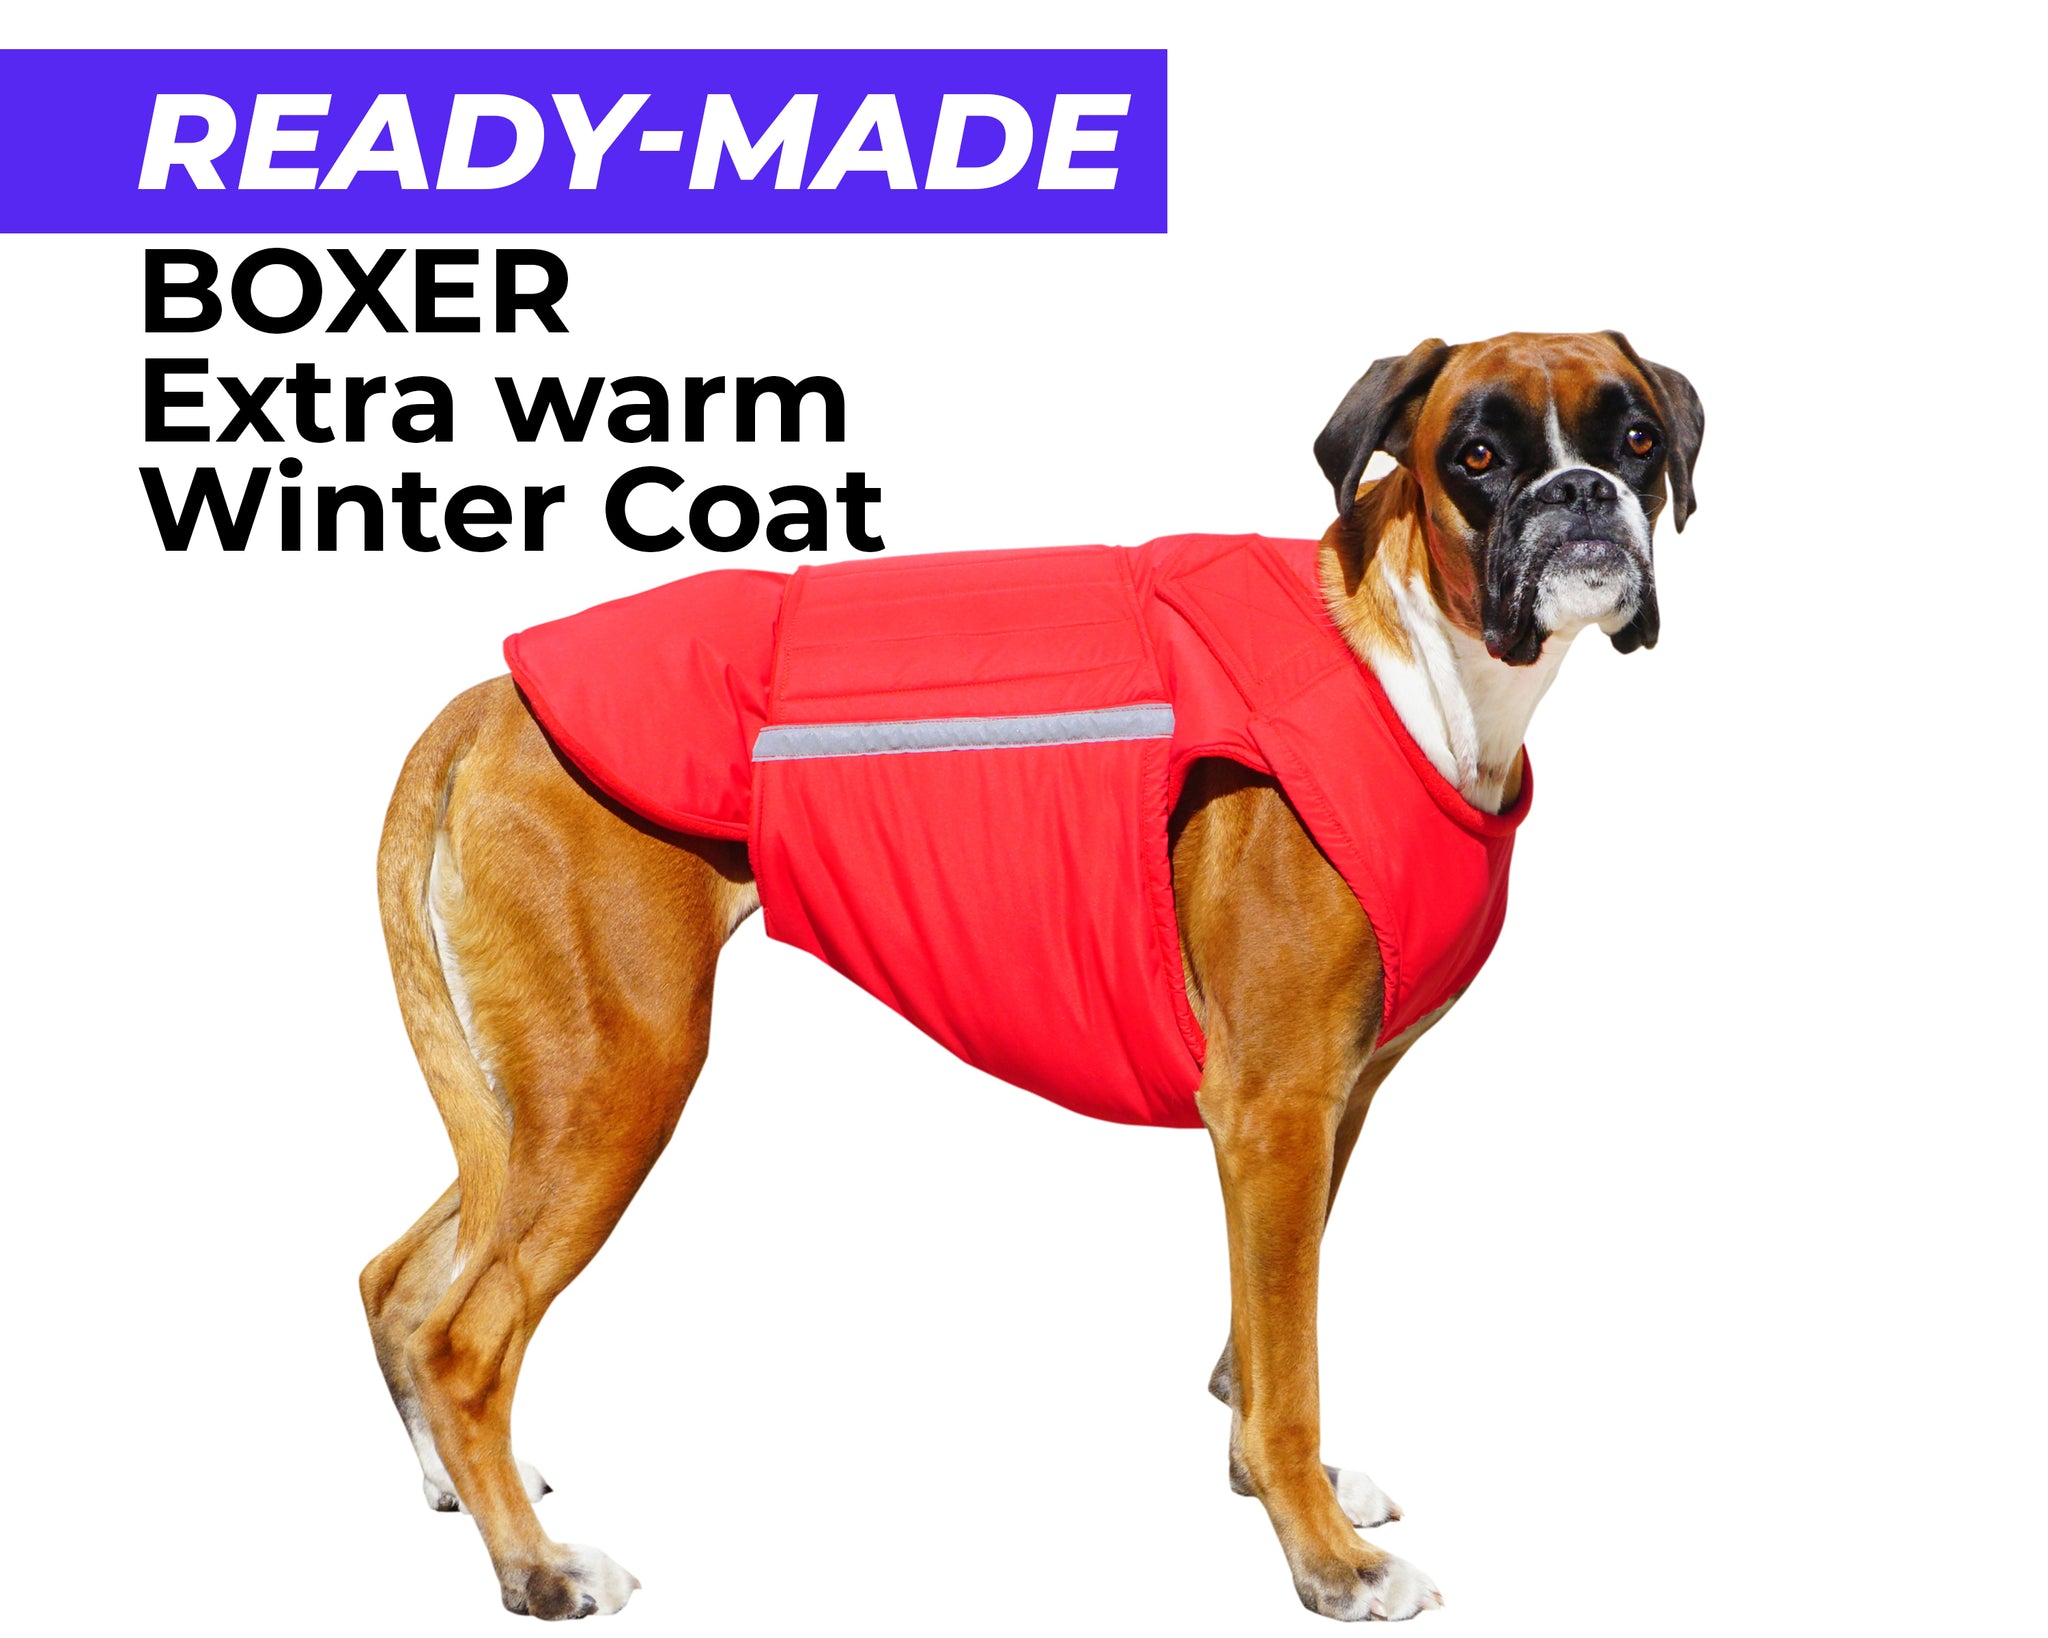 BOXER EXTRA WARM WINTER COAT - READY-MADE